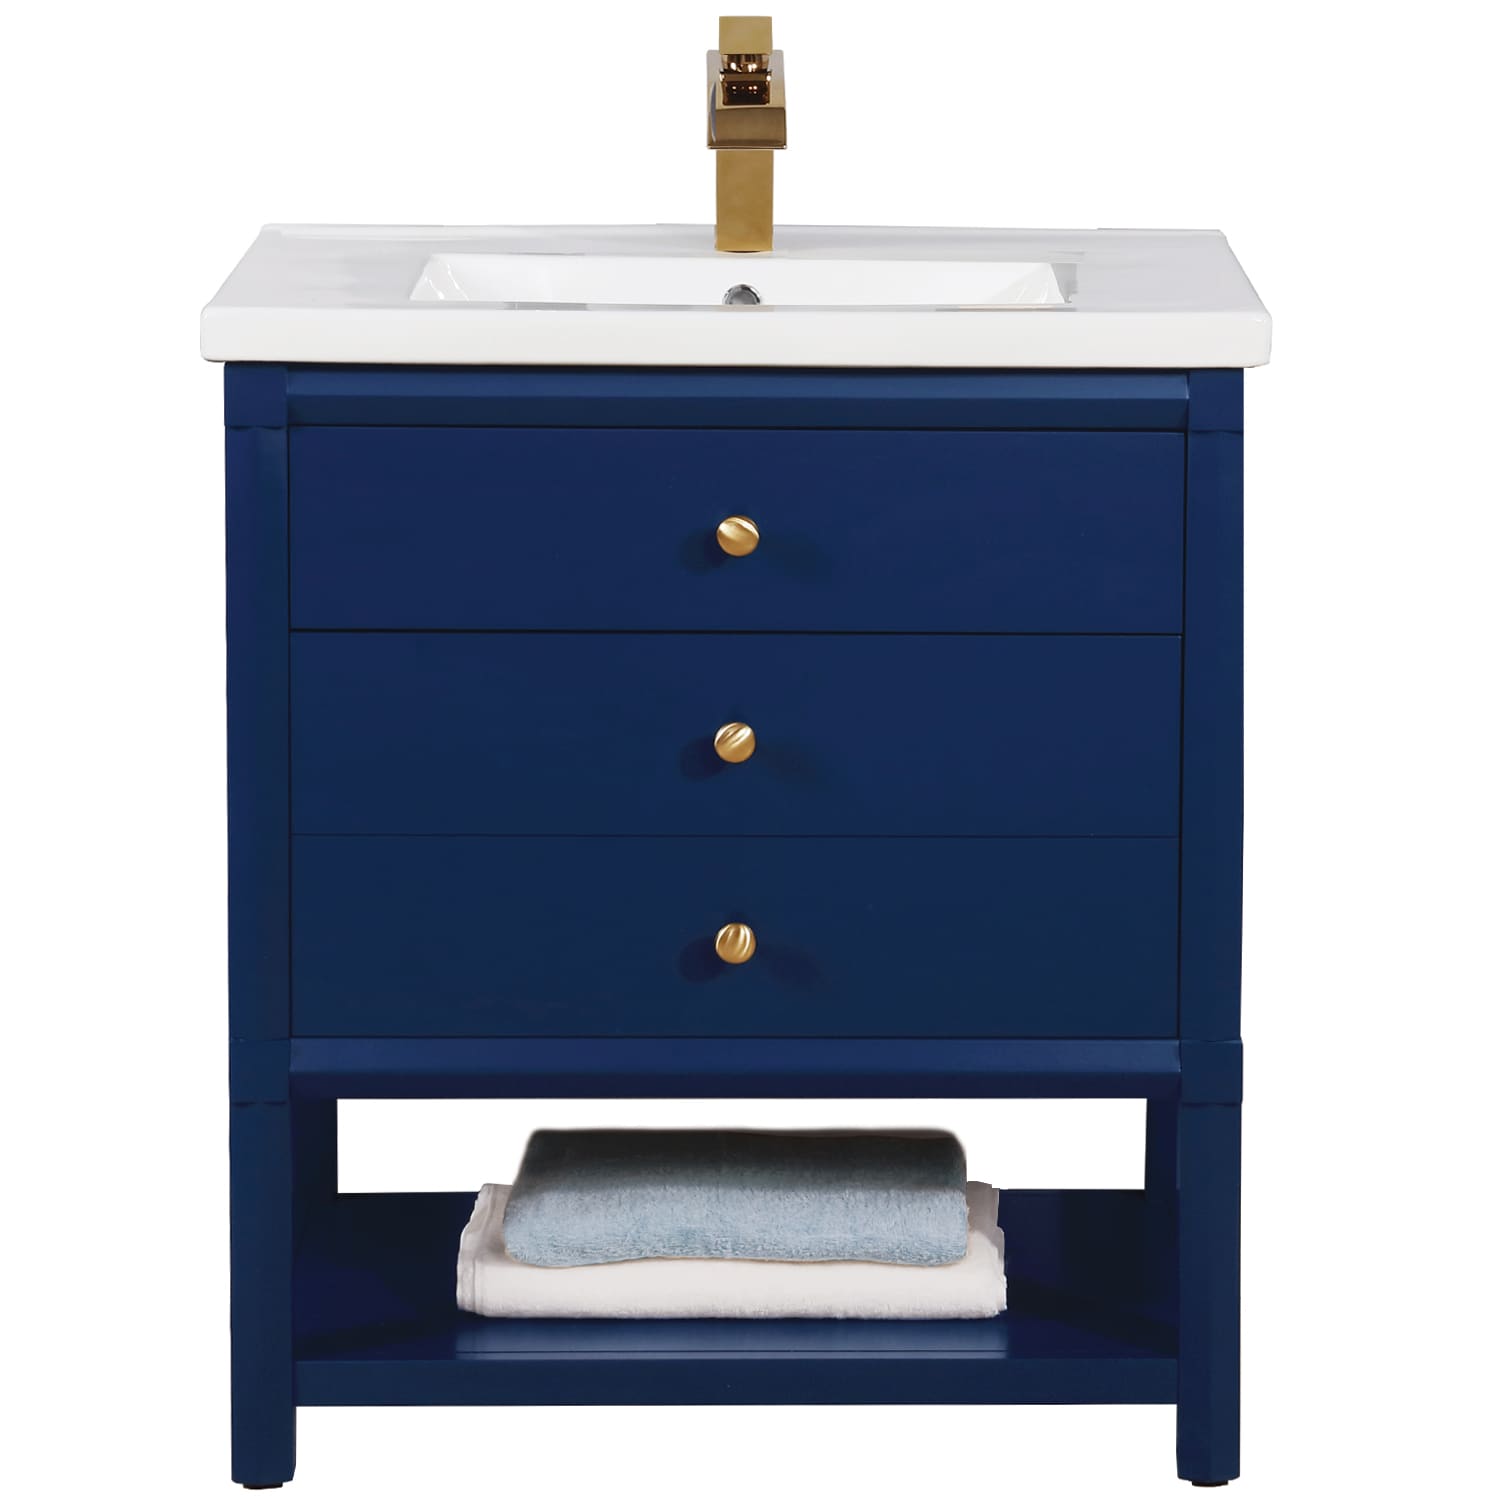 Logan 30-in Blue Single Sink Bathroom Vanity with White Porcelain Top | - Design Element S07-30-BLU